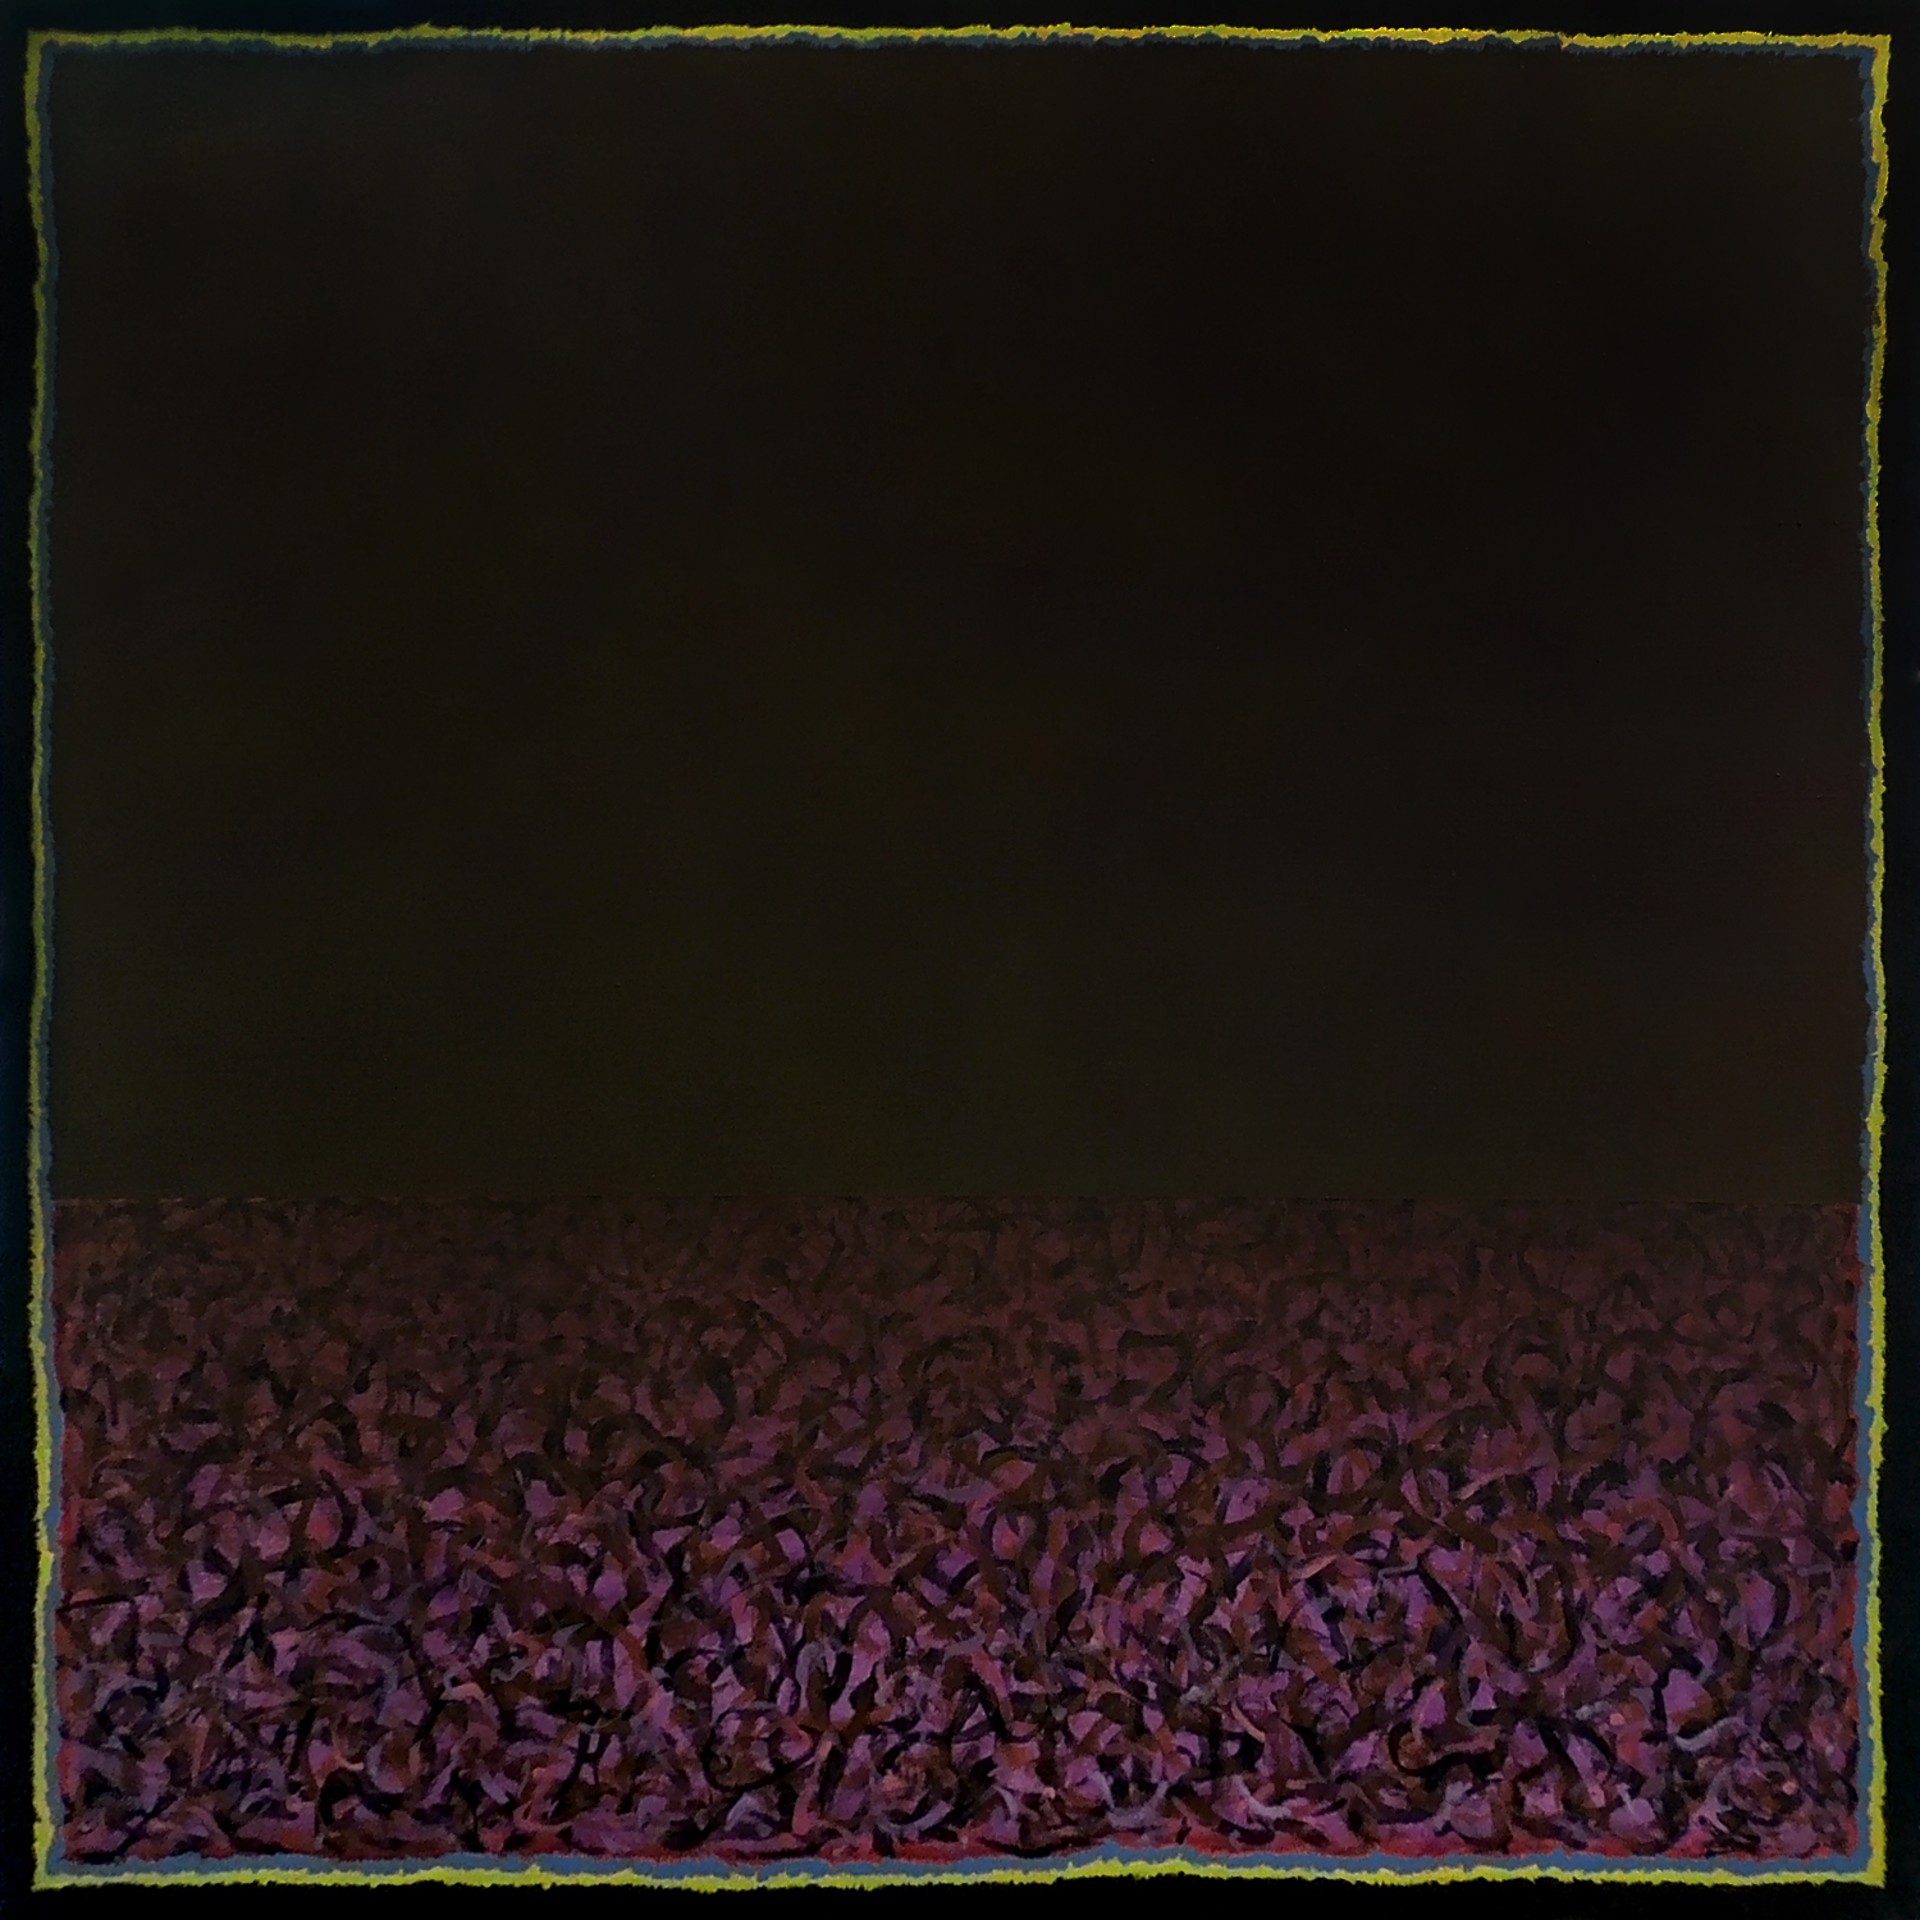 Untitled (purple reductive landscape) by Jack Boynton